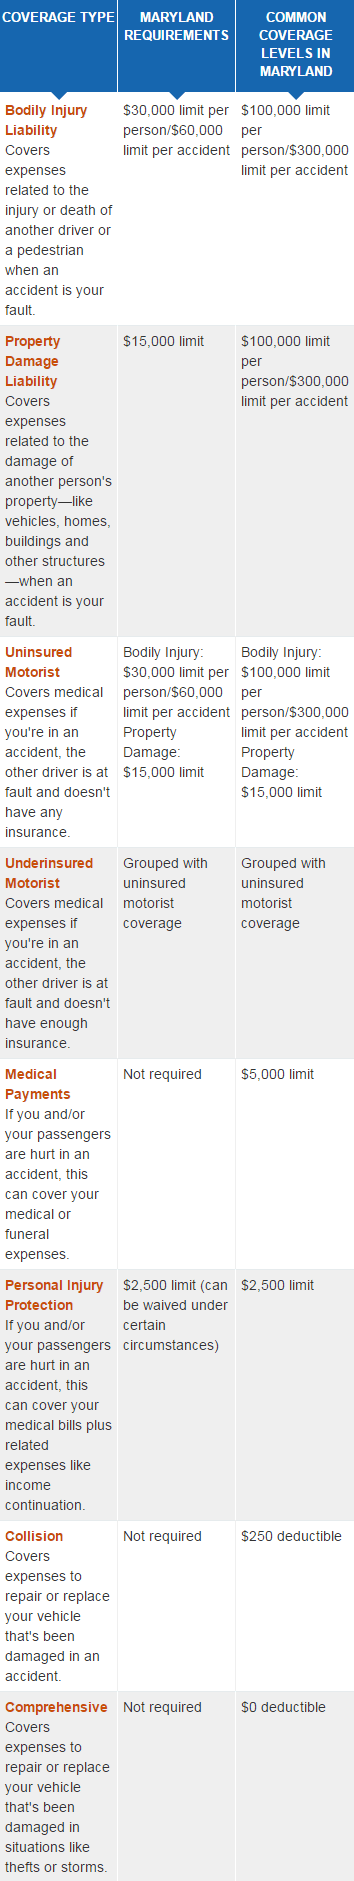 maryland car insurance